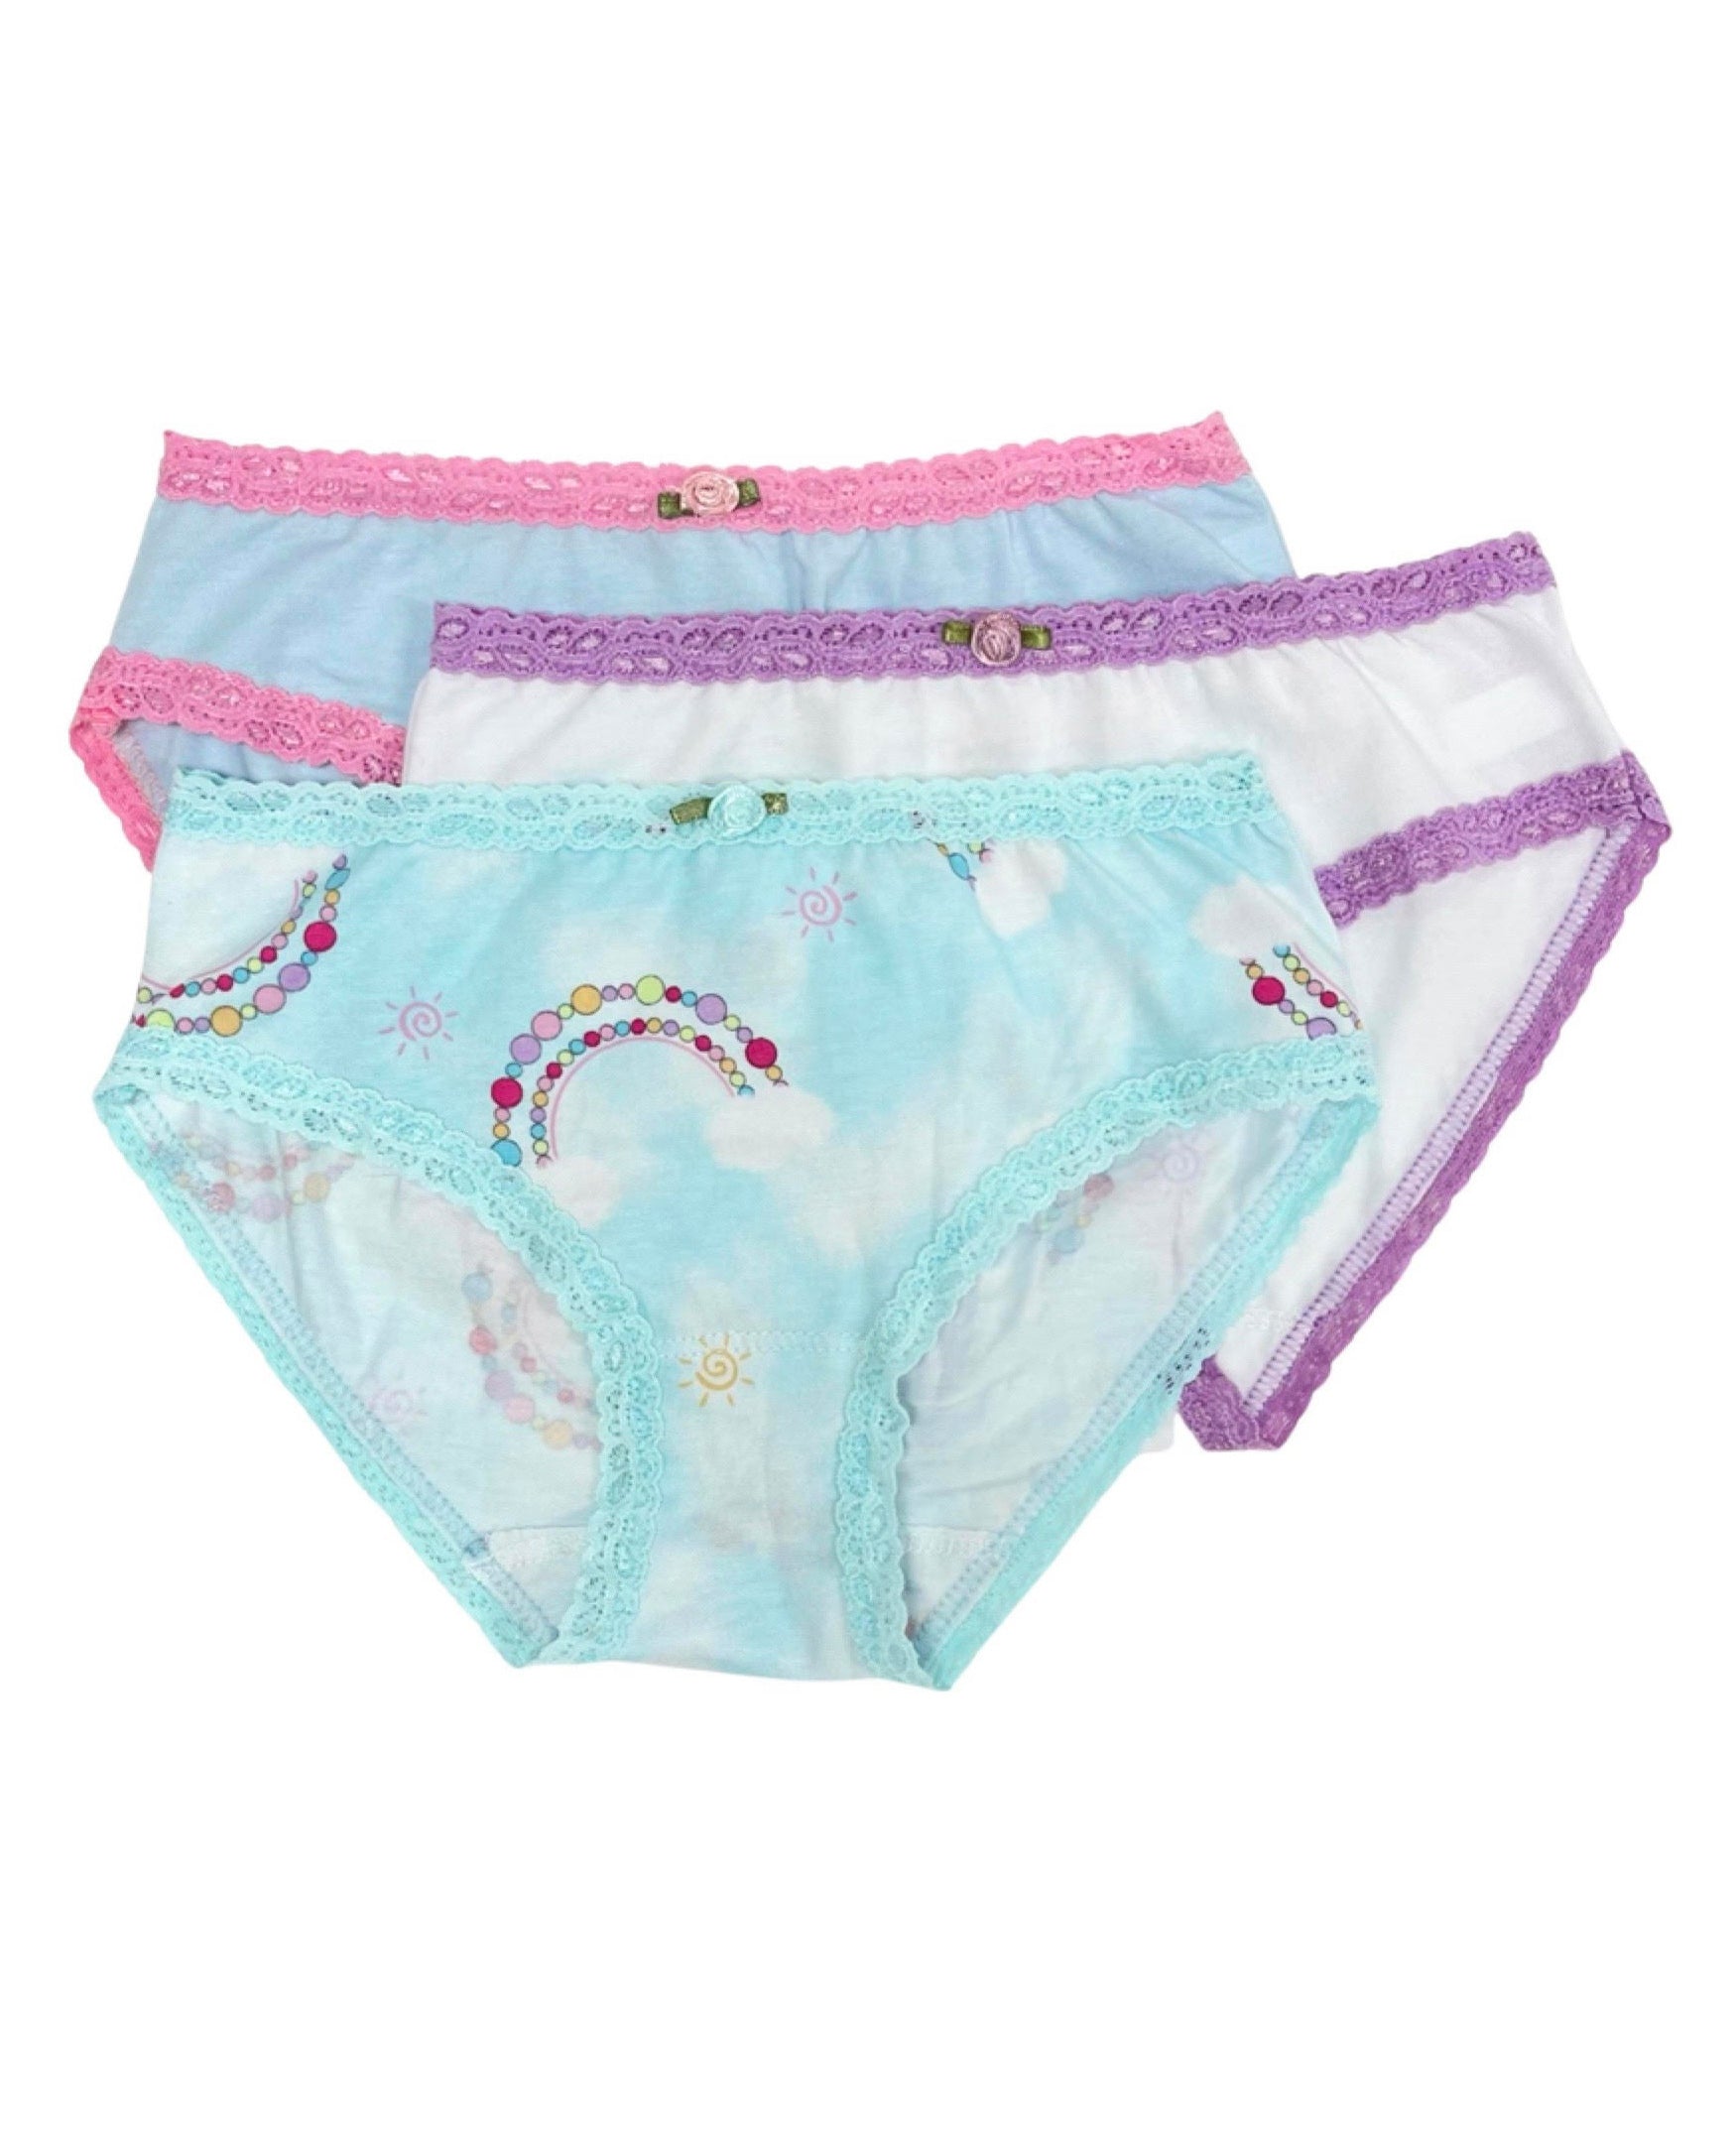 Junior Panties Underwear Various Styles & Brands Size X Large (15-17) NWT